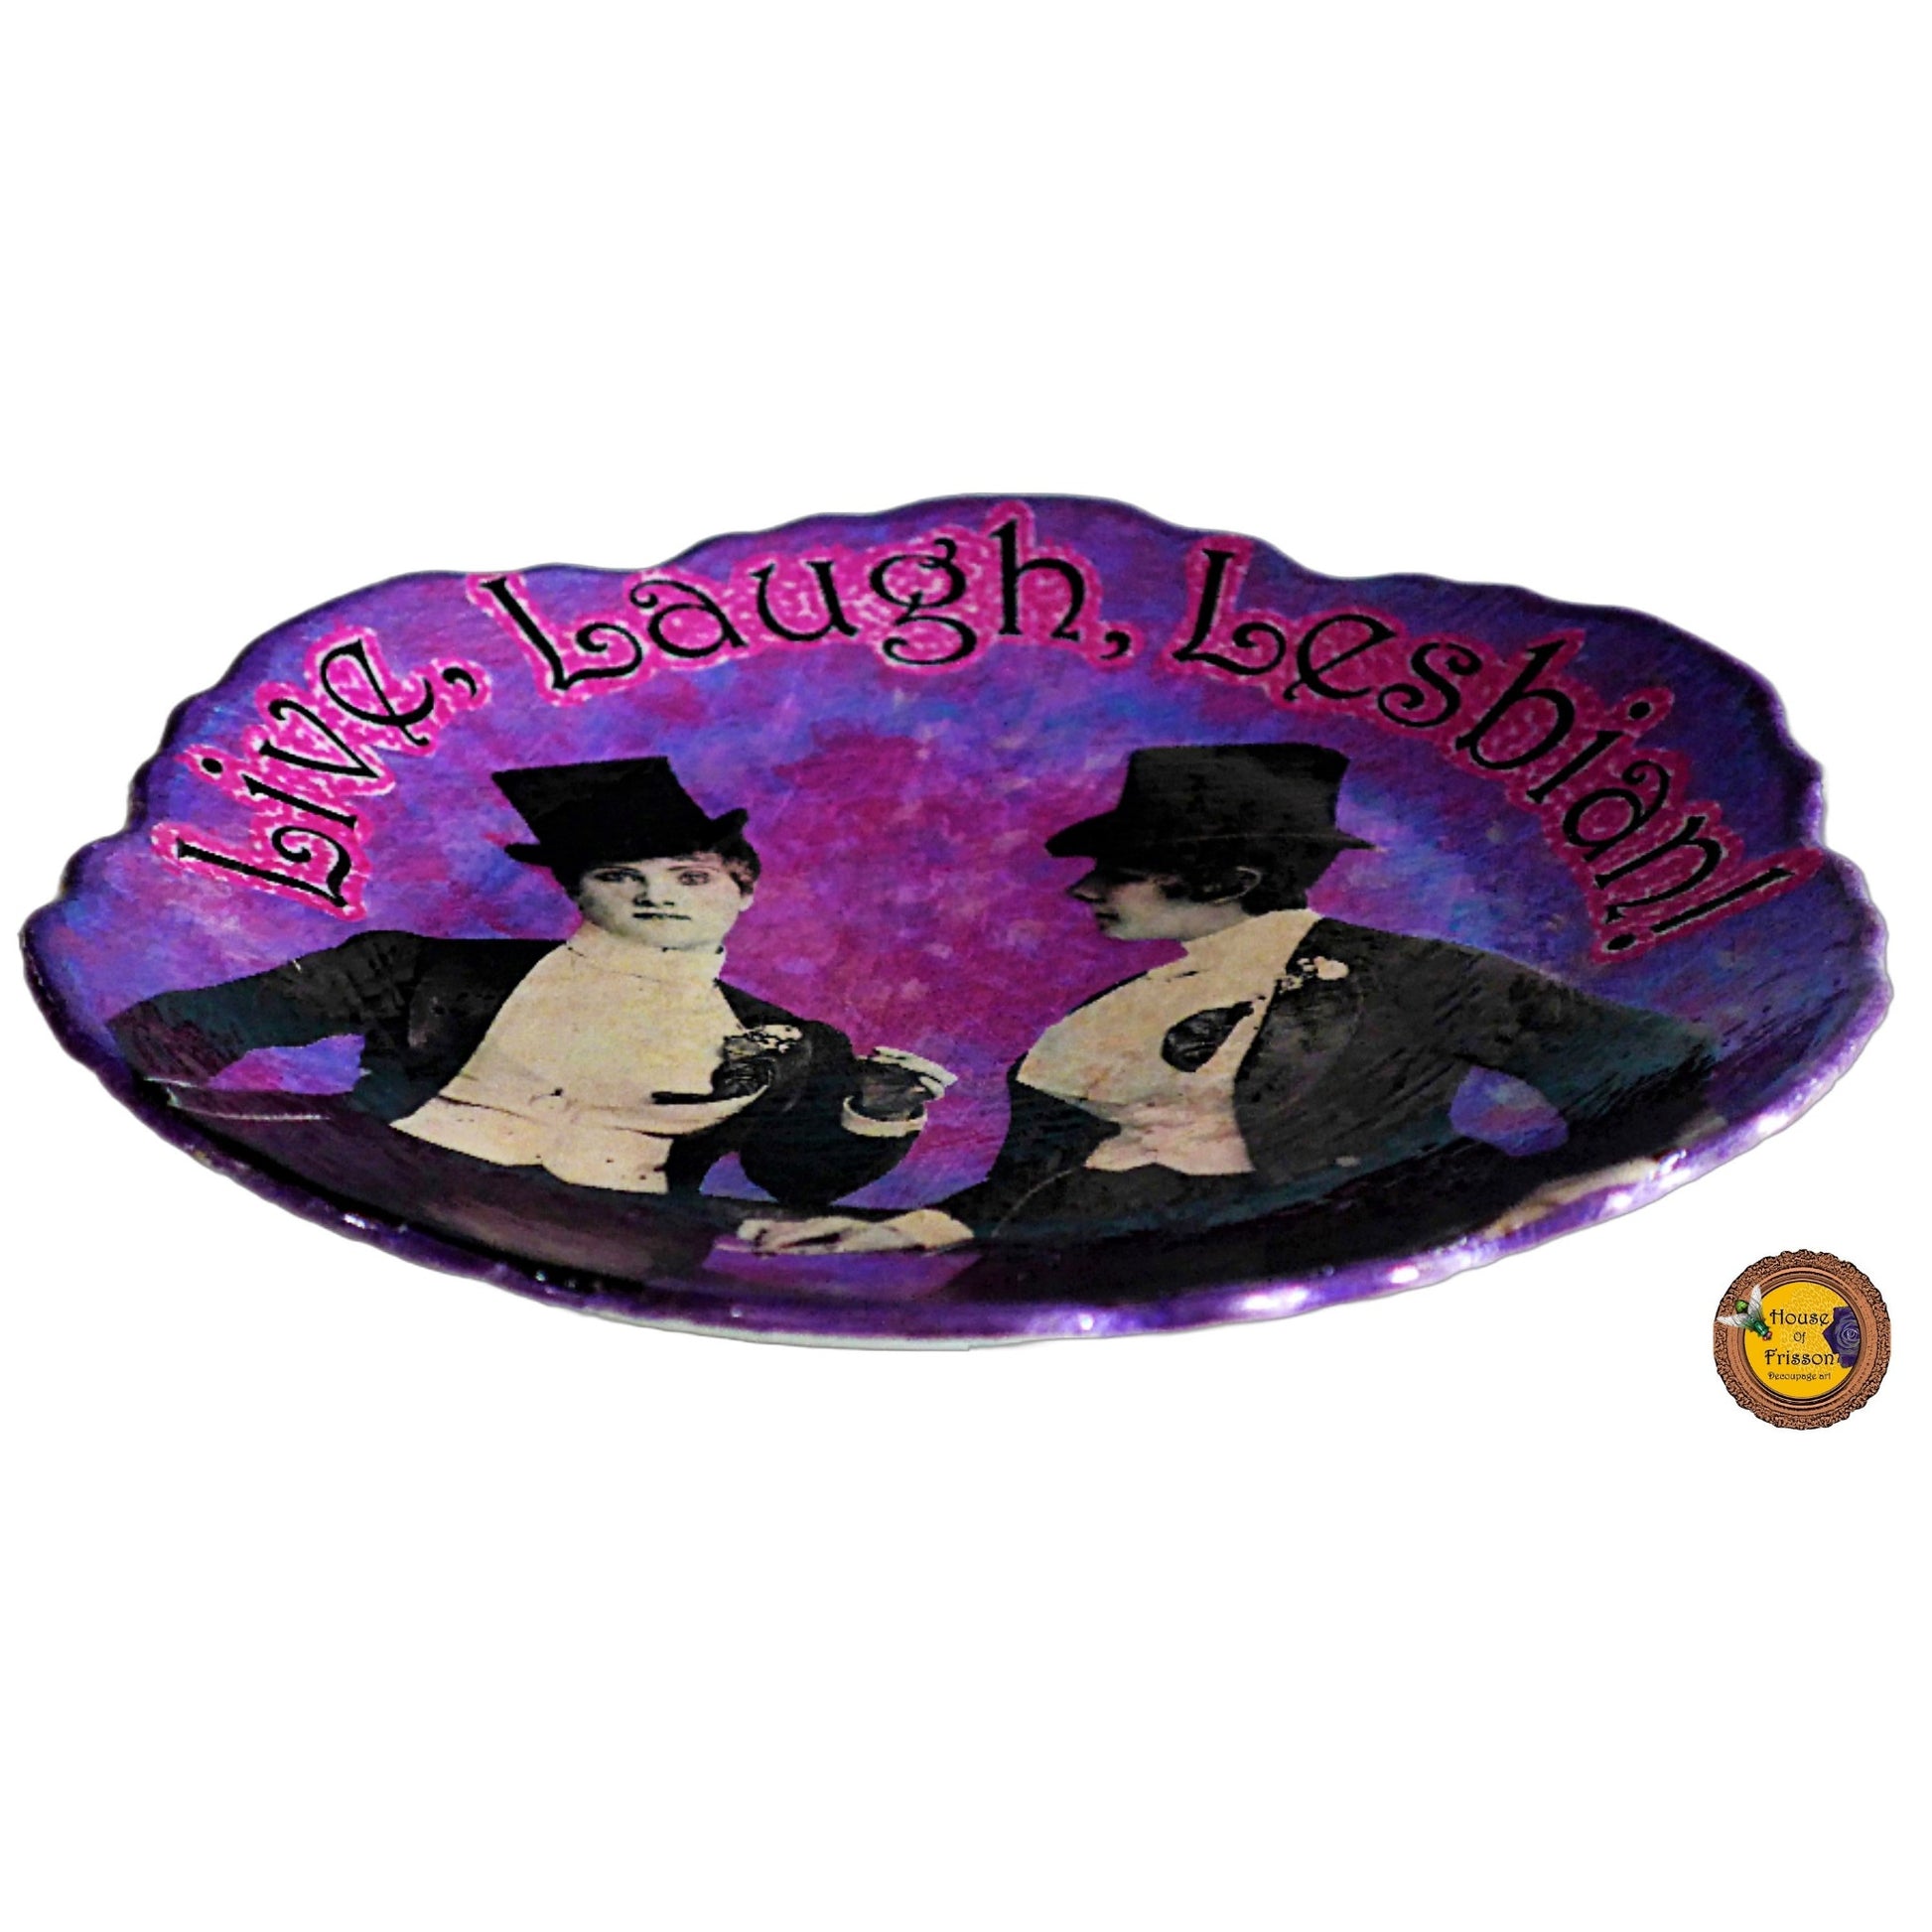 House of Frisson Live, Laugh, Lesbian! Purple Wall Plate details